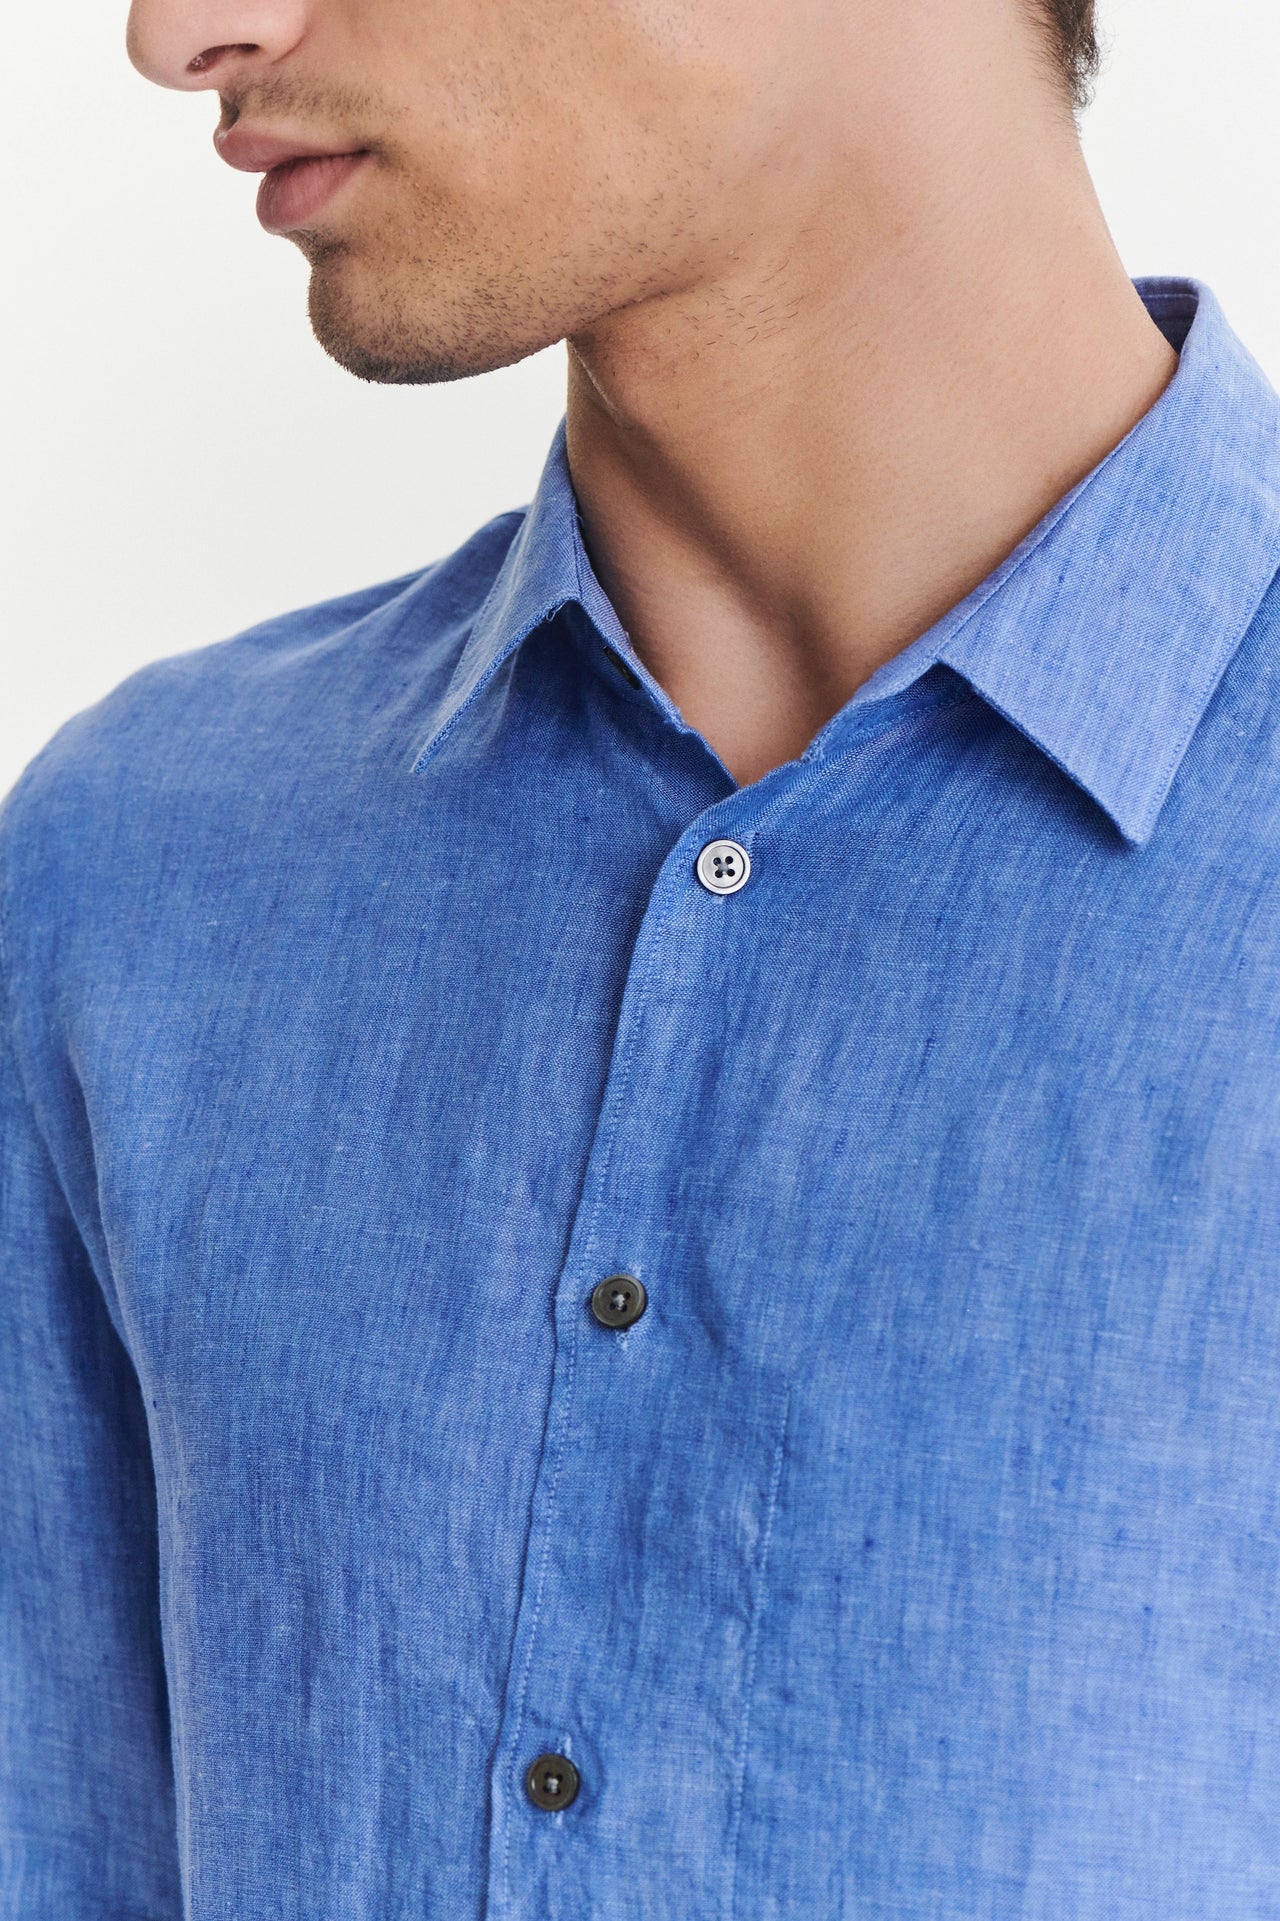 Feel Good Shirt in a Sardinian Blue Traceable European Linen